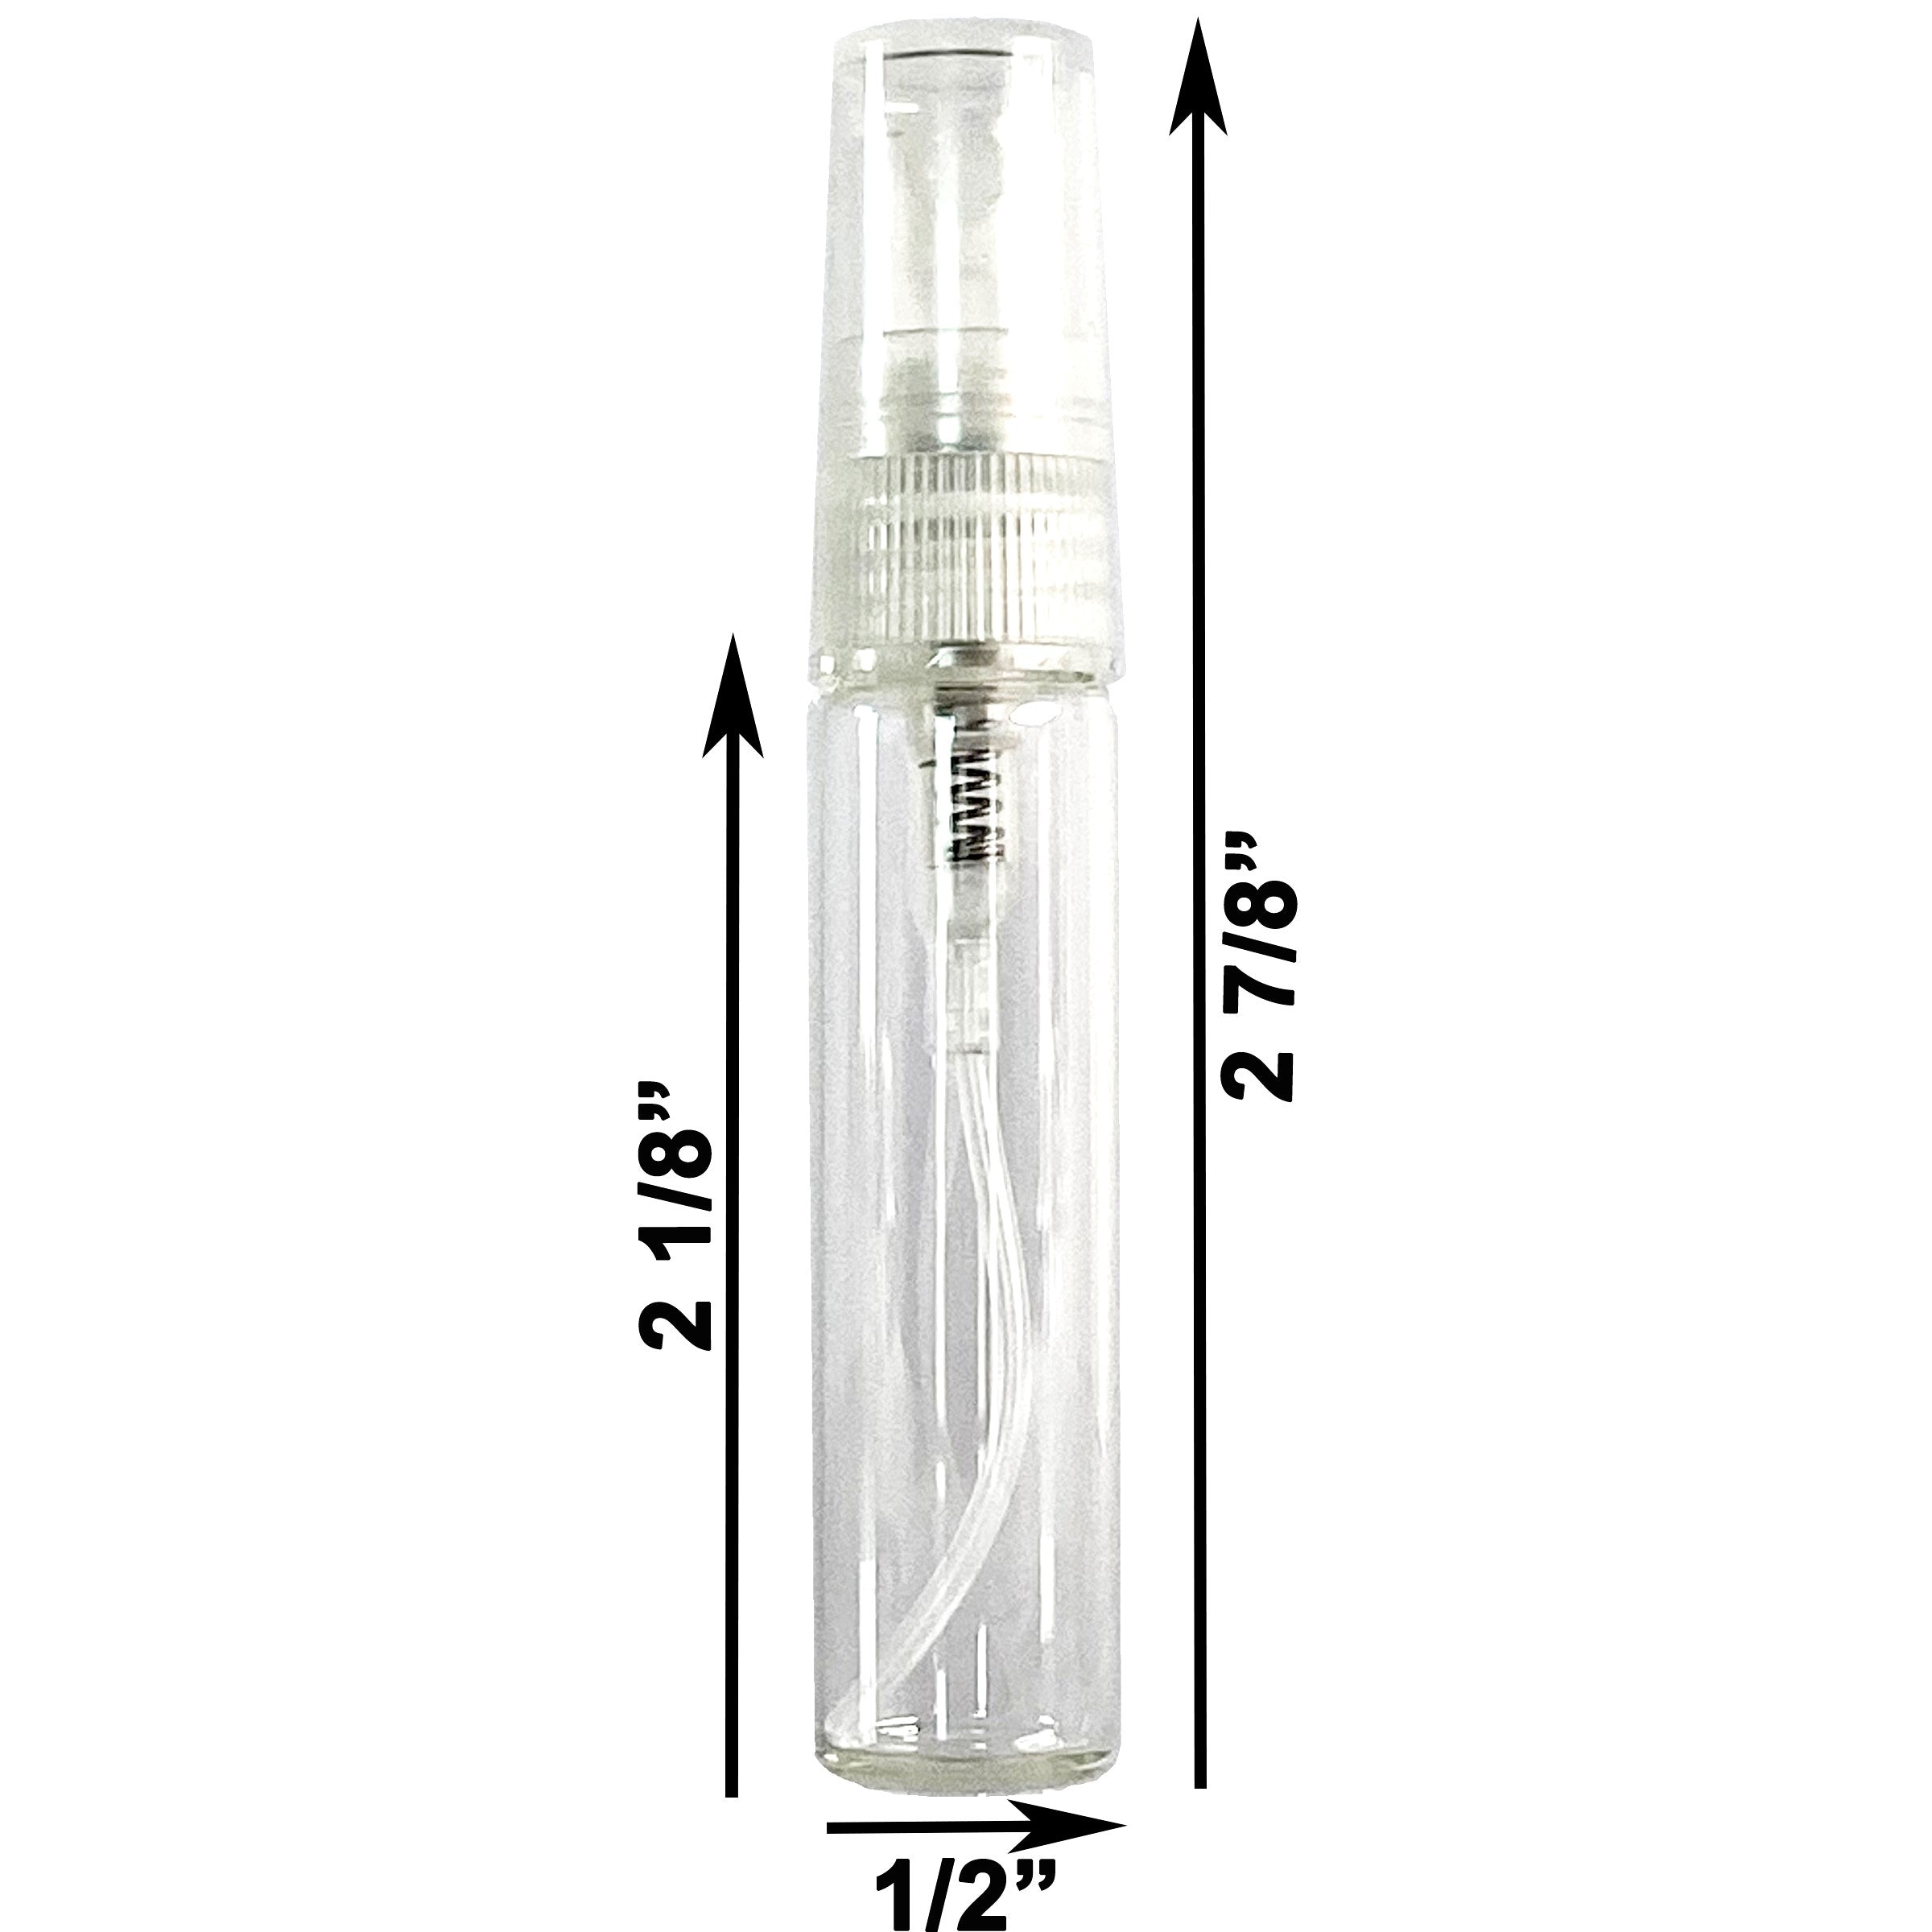 5ml 0.17oz Perfume Glass Spray Bottles Clear Atomizers